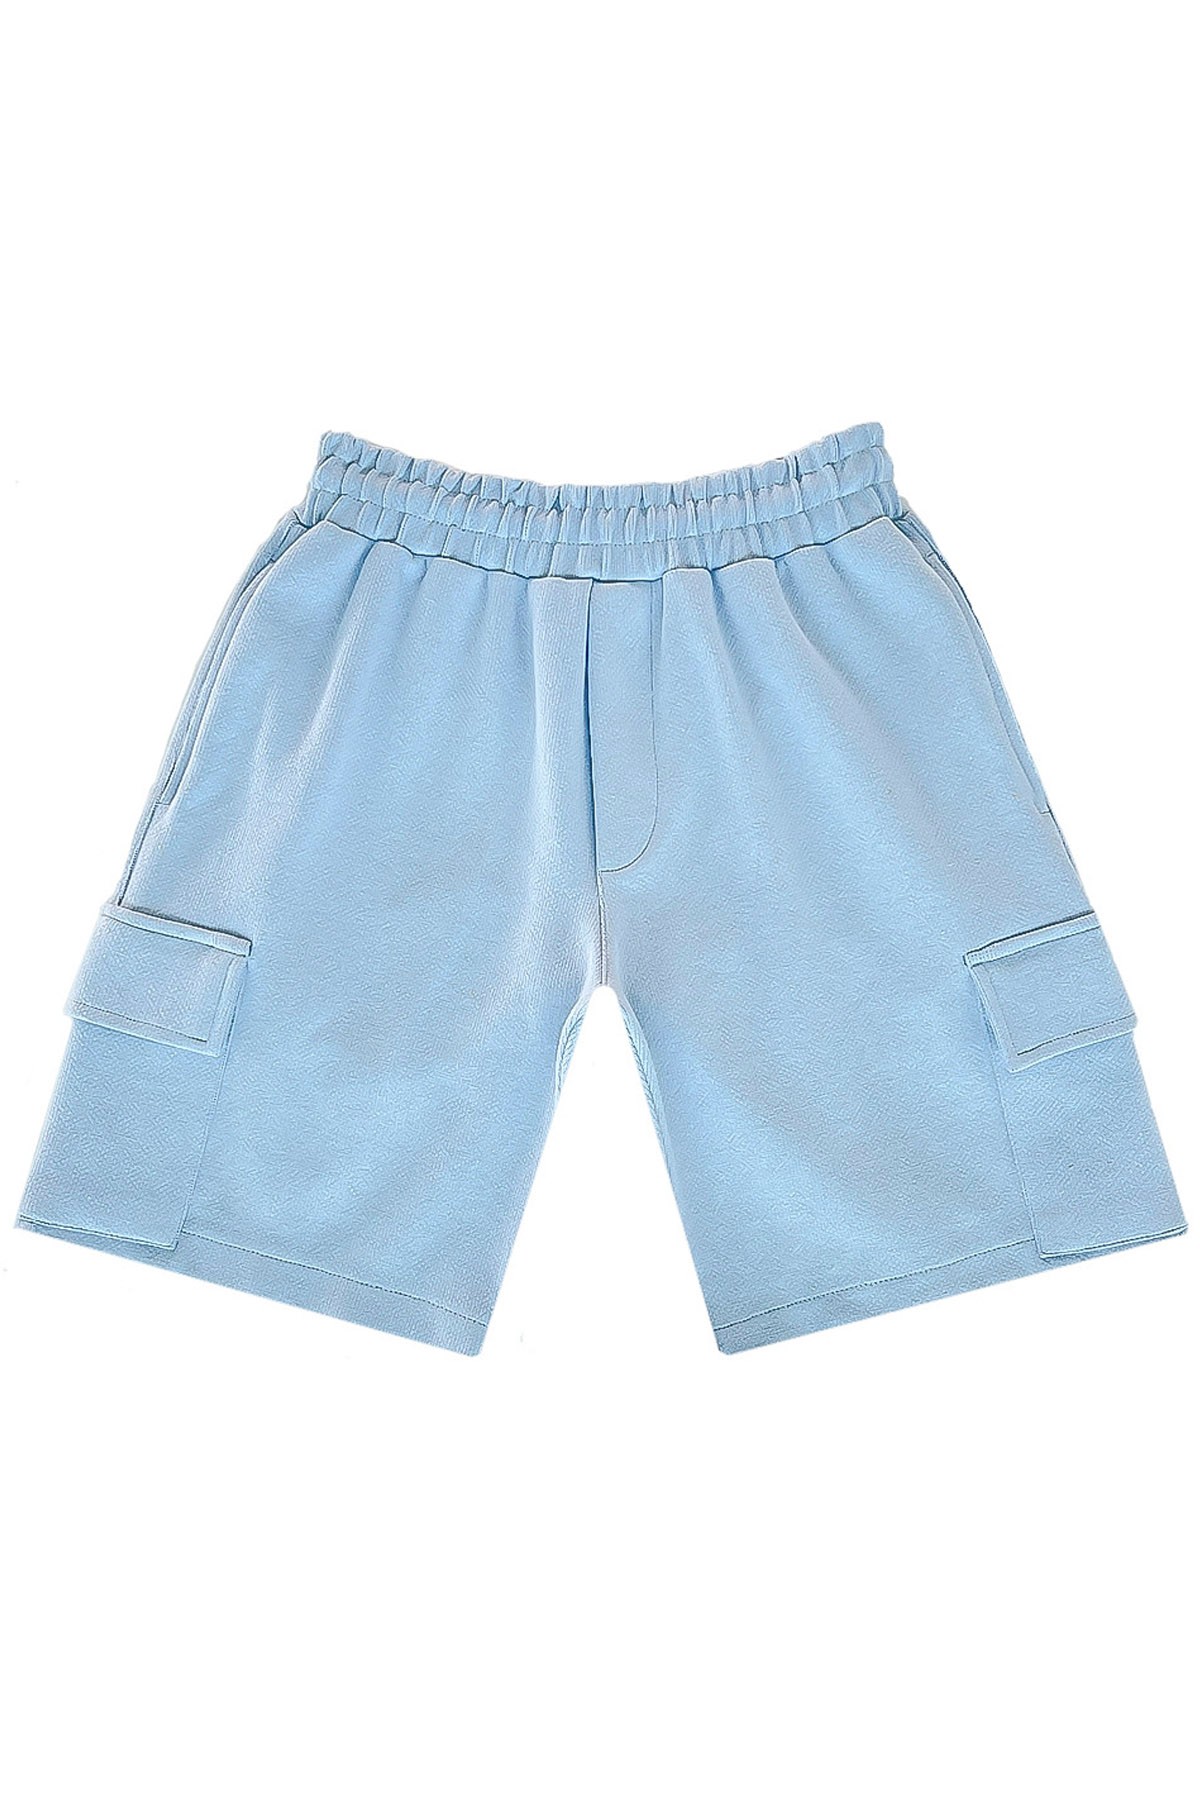 2050 - Cargo Shorts - BABY BLUE